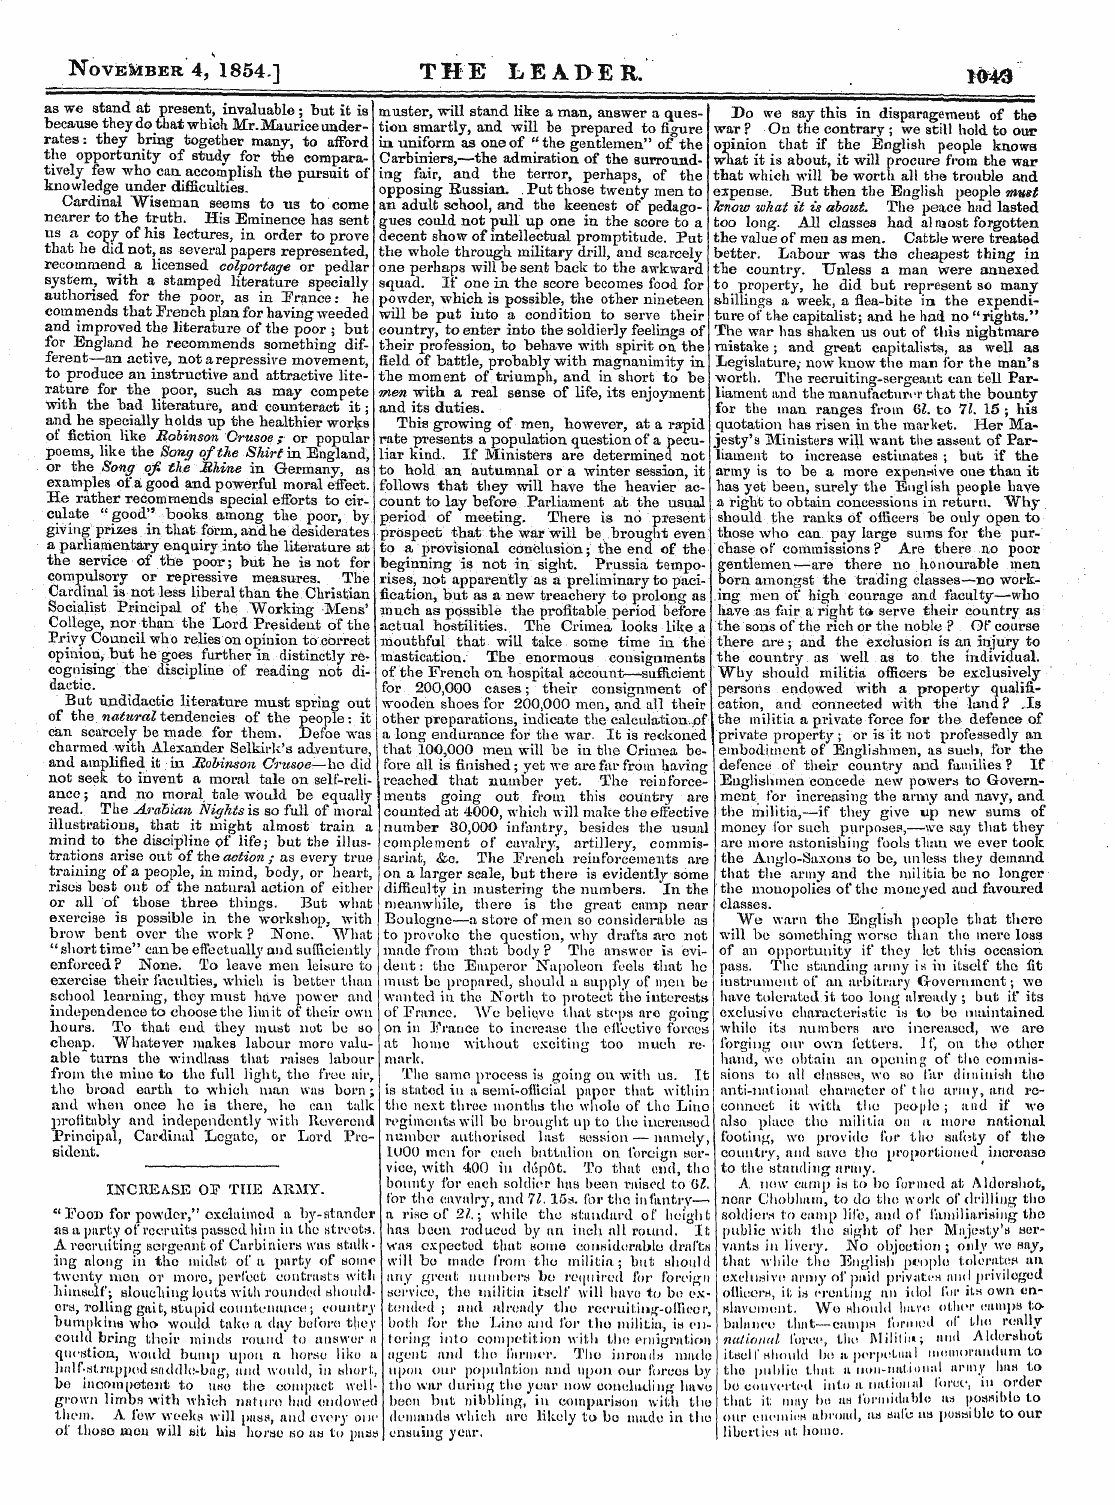 Leader (1850-1860): jS F Y, Country edition - - ^ A . ^-R&Gt; Rpttp &Gt; Incllkabfc Ol&Lt; 1 Wu Aixmx